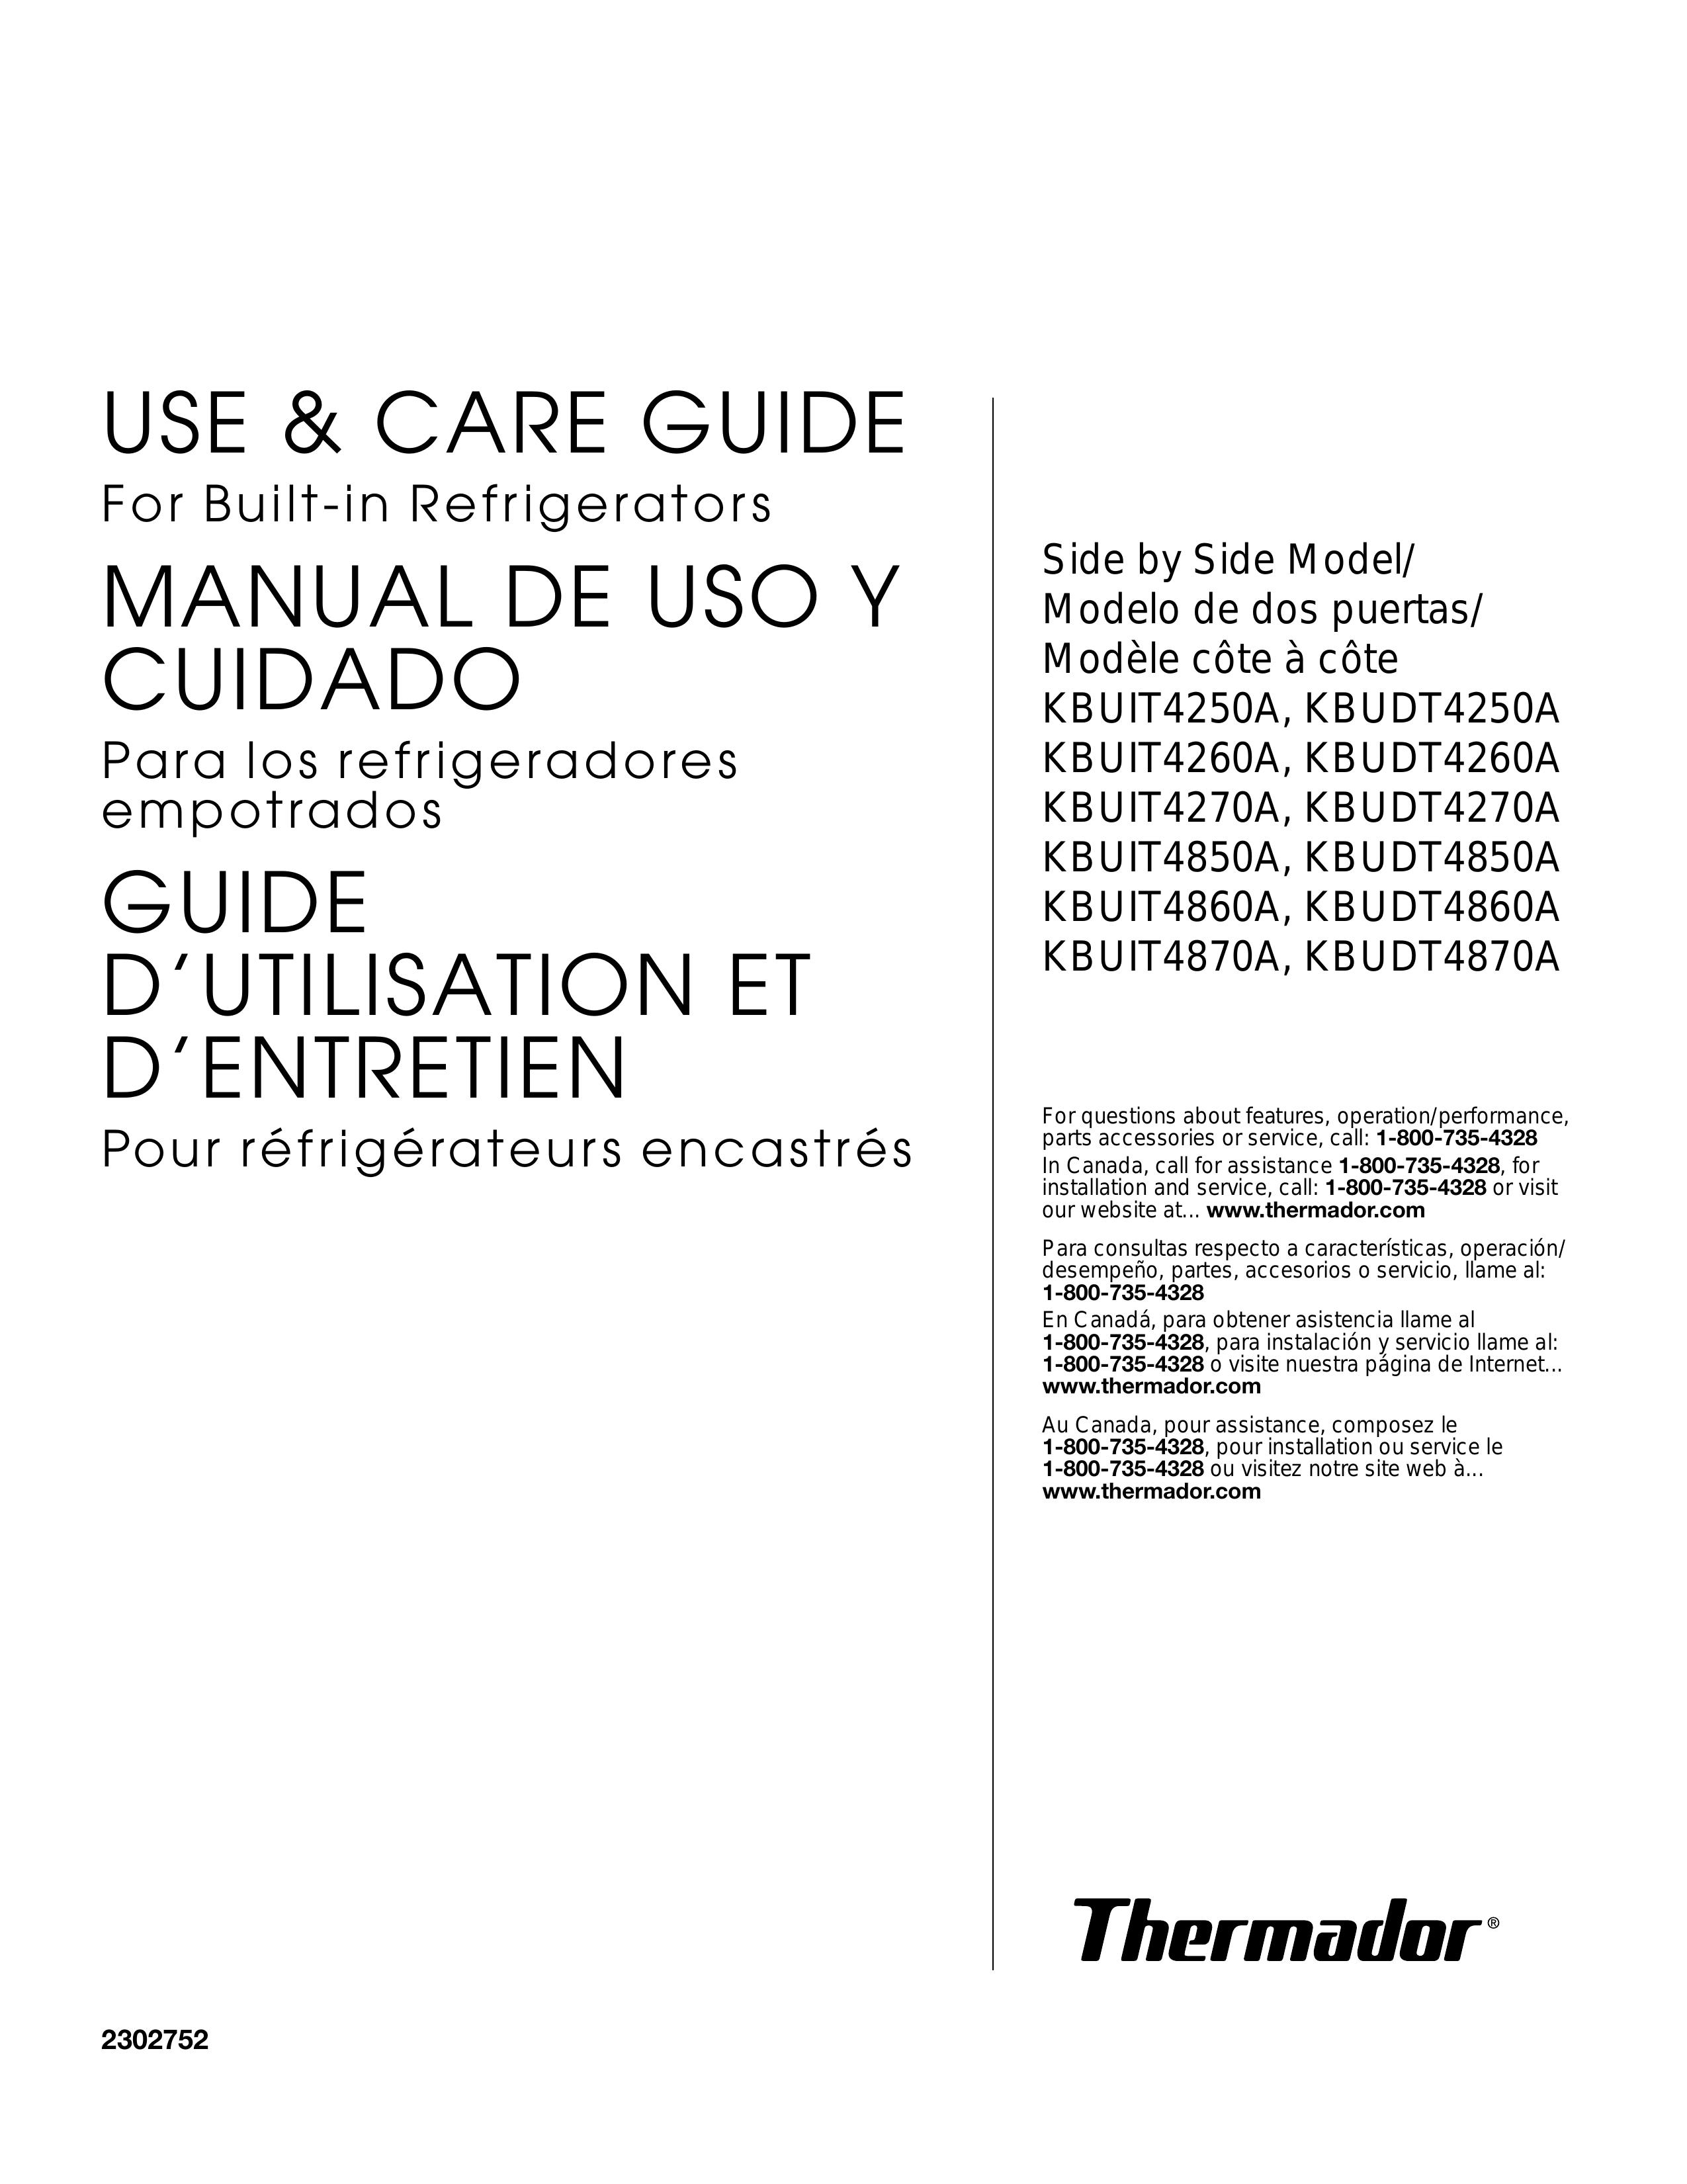 Thermador KBUDT4870A Refrigerator User Manual